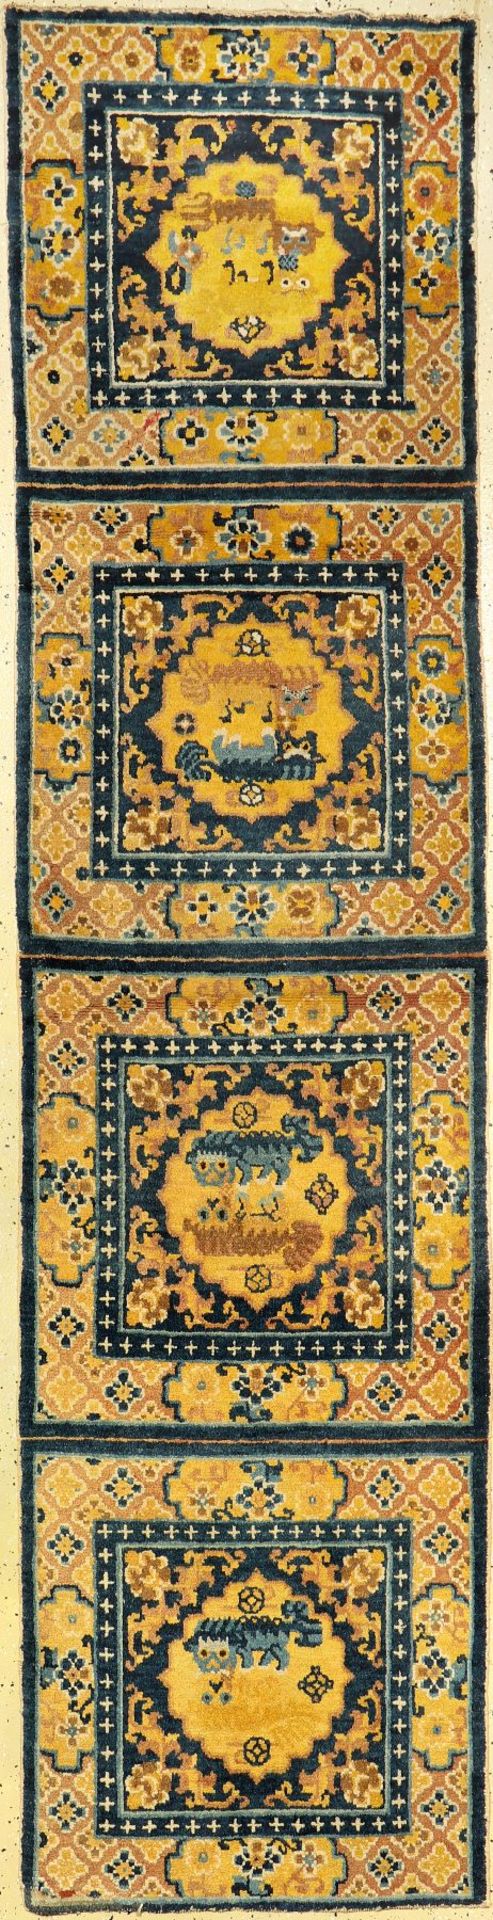 Ninghsia "Galerie" antik, (Fo-Hunde), China, Ende 19.Jhd., Wolle auf Baumwolle, ca. 274 x 70 cm,